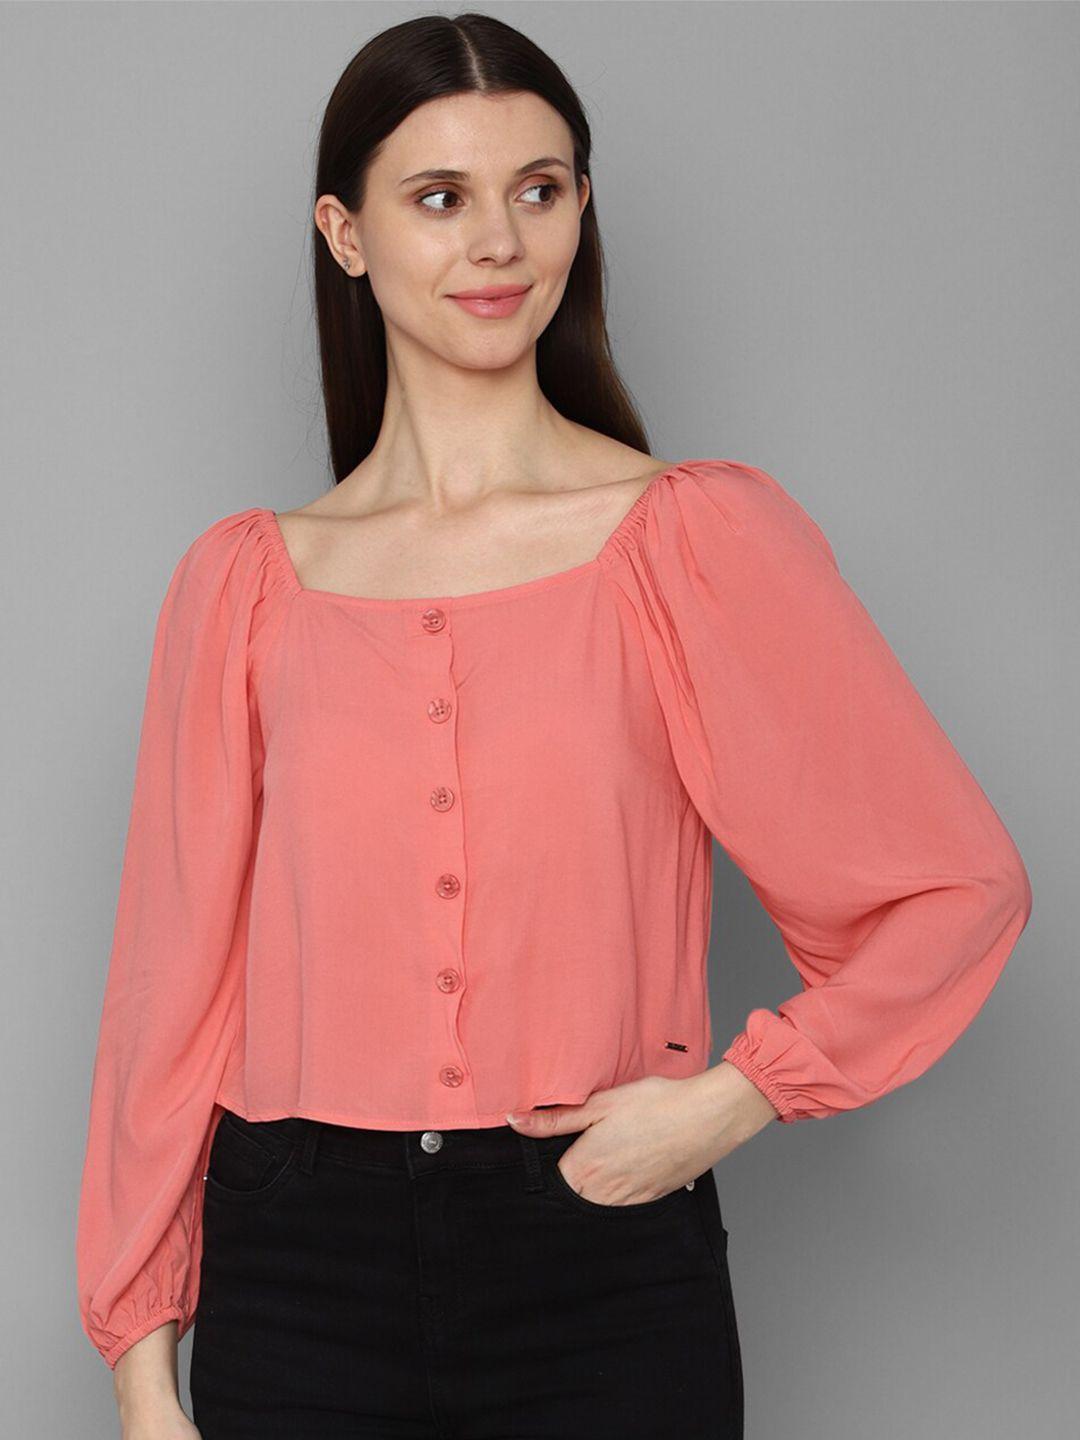 allen solly woman peach-coloured shirt style crop top